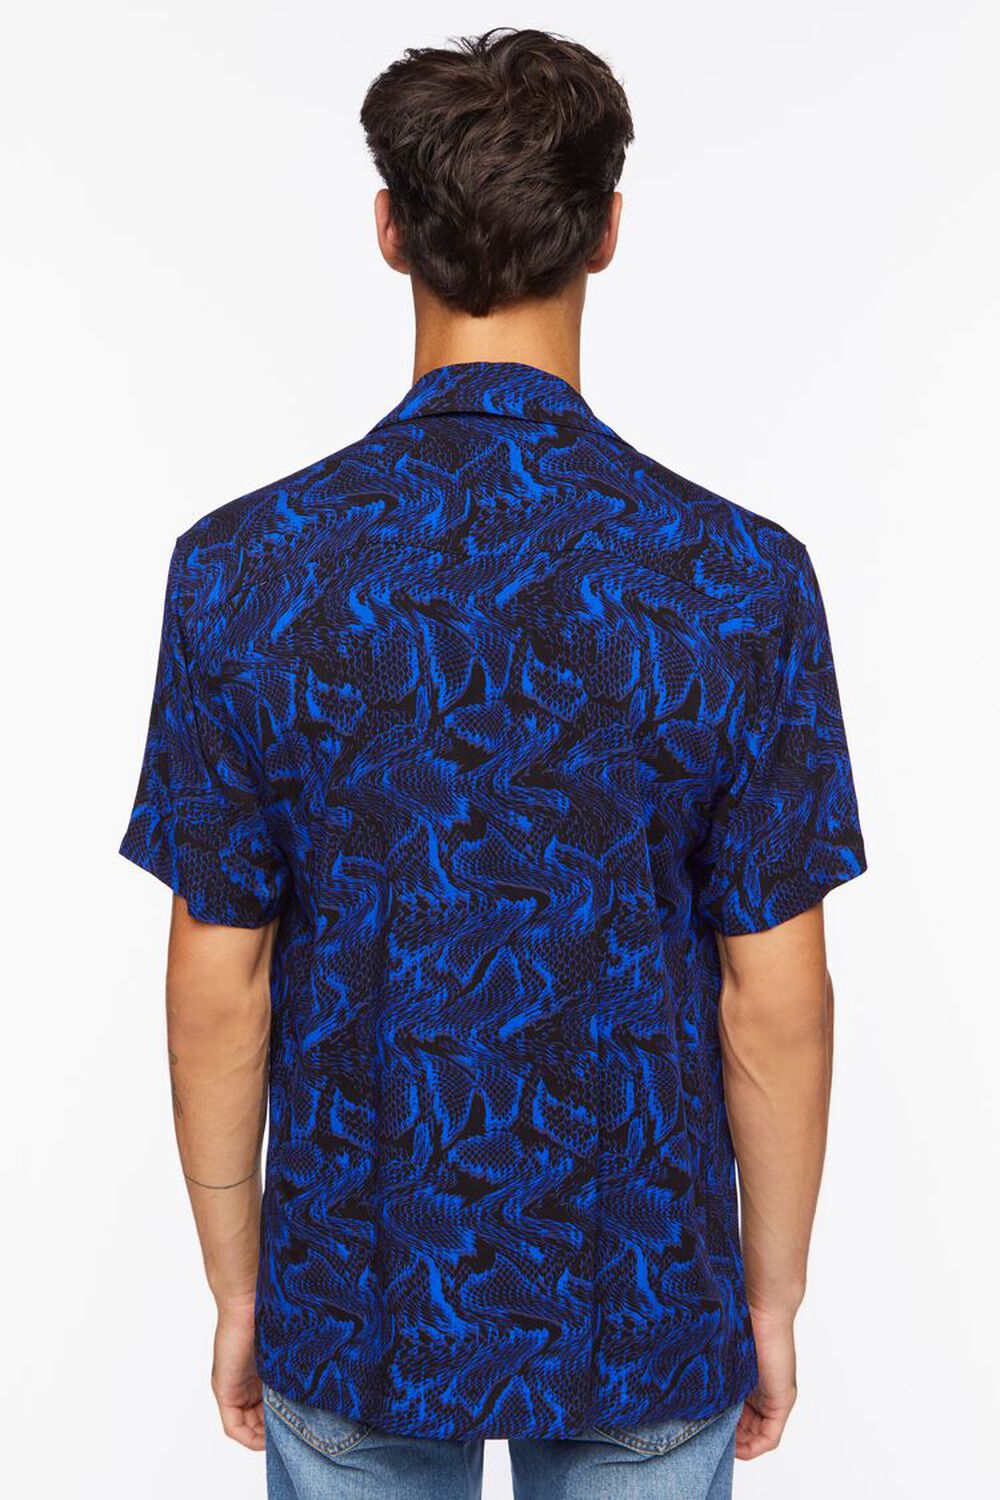 BLACK/BLUE Abstract Snakeskin Shirt, image 3